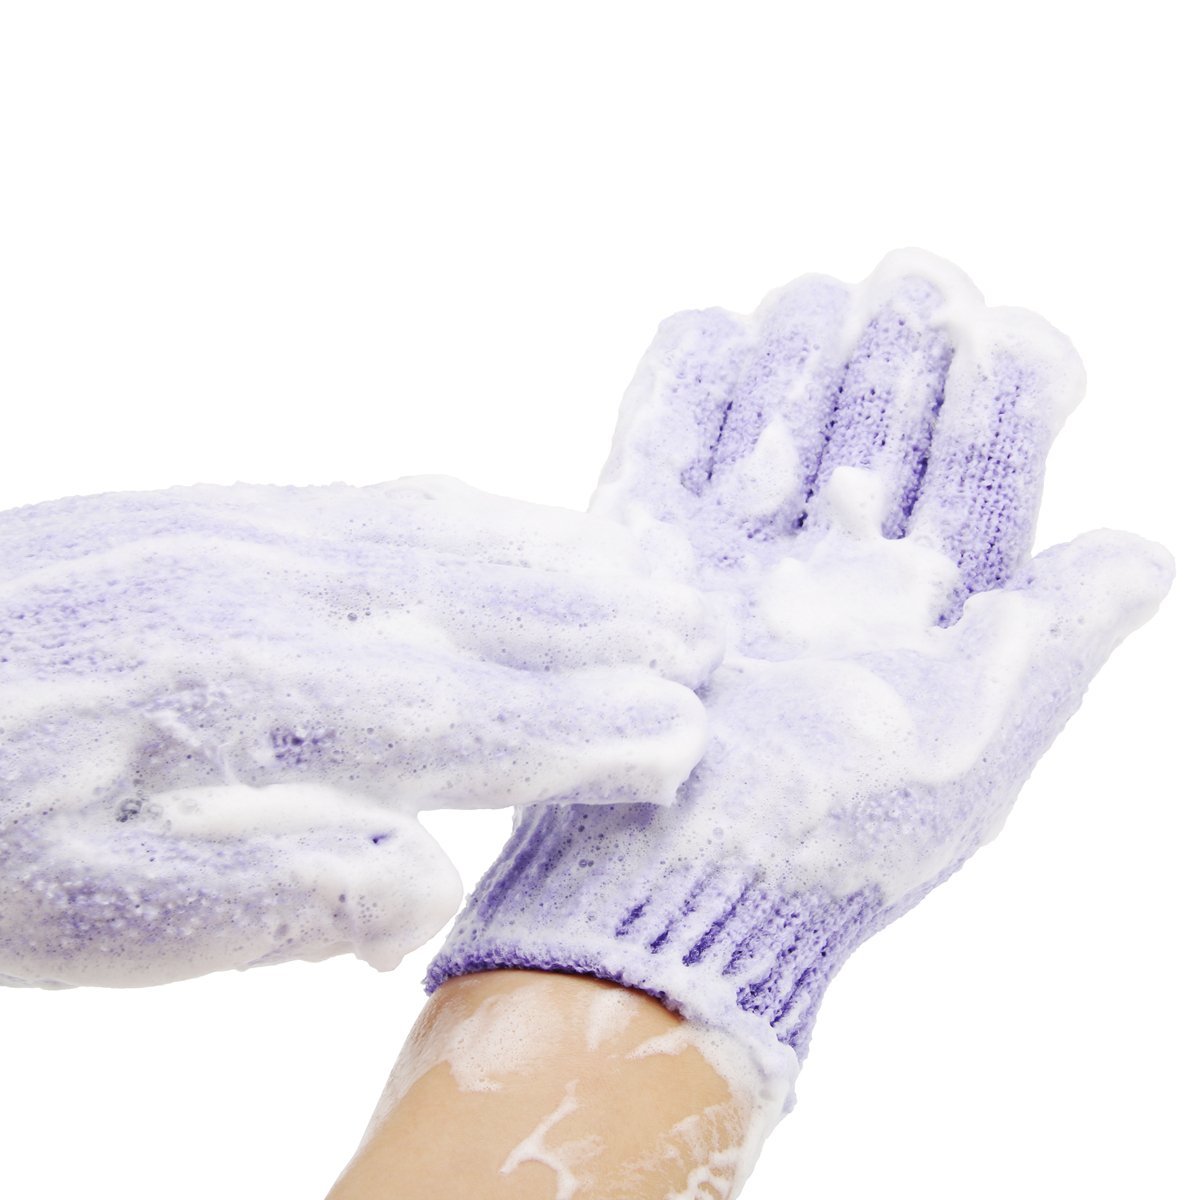 4 Pair Set Scrubbing Exfoliating Gloves, Double Side Durable Nylon Shower Gloves, Body Scrub Exfoliator for Men, Women & Kids, Bath Scrubber for Acne & Dead Cell - image 2 of 6